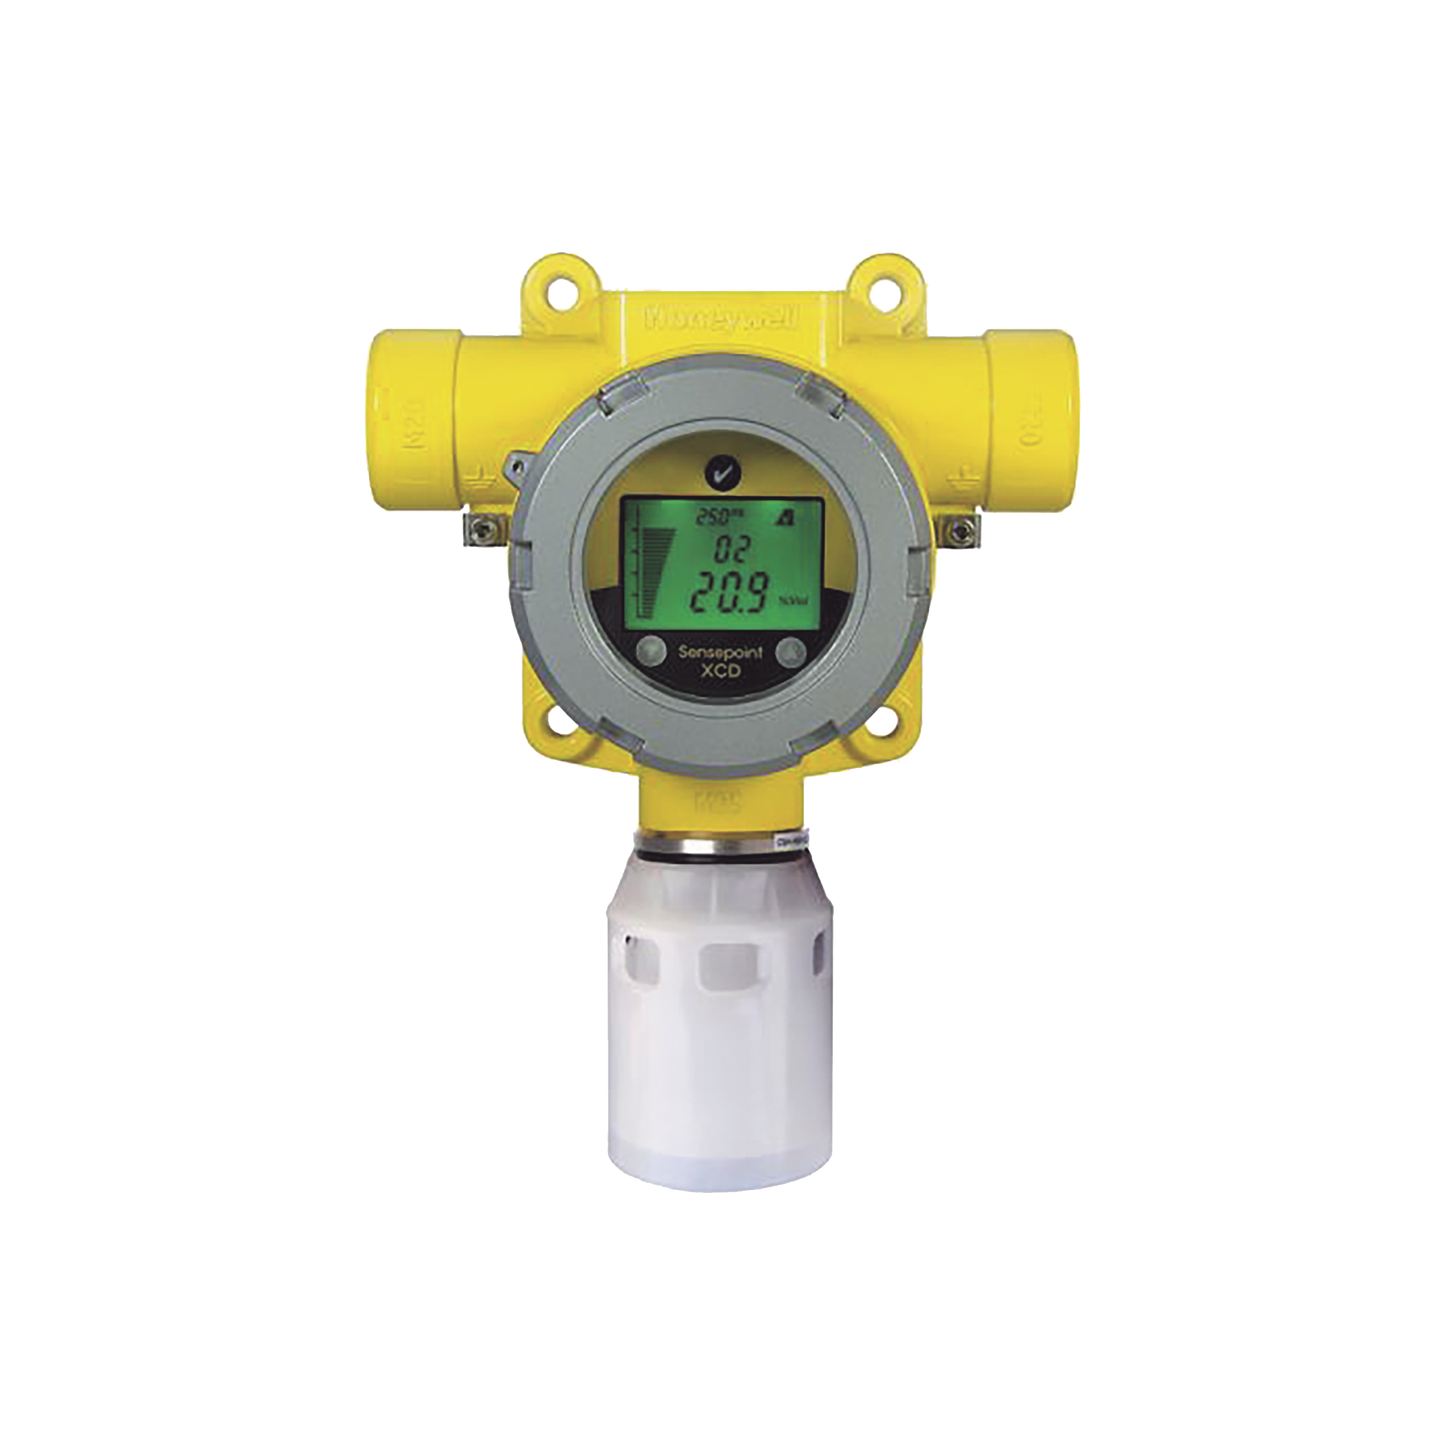 Detector Fijo De Gas Con Sensor Infrarrojo De Propano (C3H8) 0-100% LEL, Para Gases Combustibles, Salida 4-20 mA, UL/c-UL/INMETRO, 2x3/4" NPT, Carcasa Aluminio, Serie Sensepoint XCD